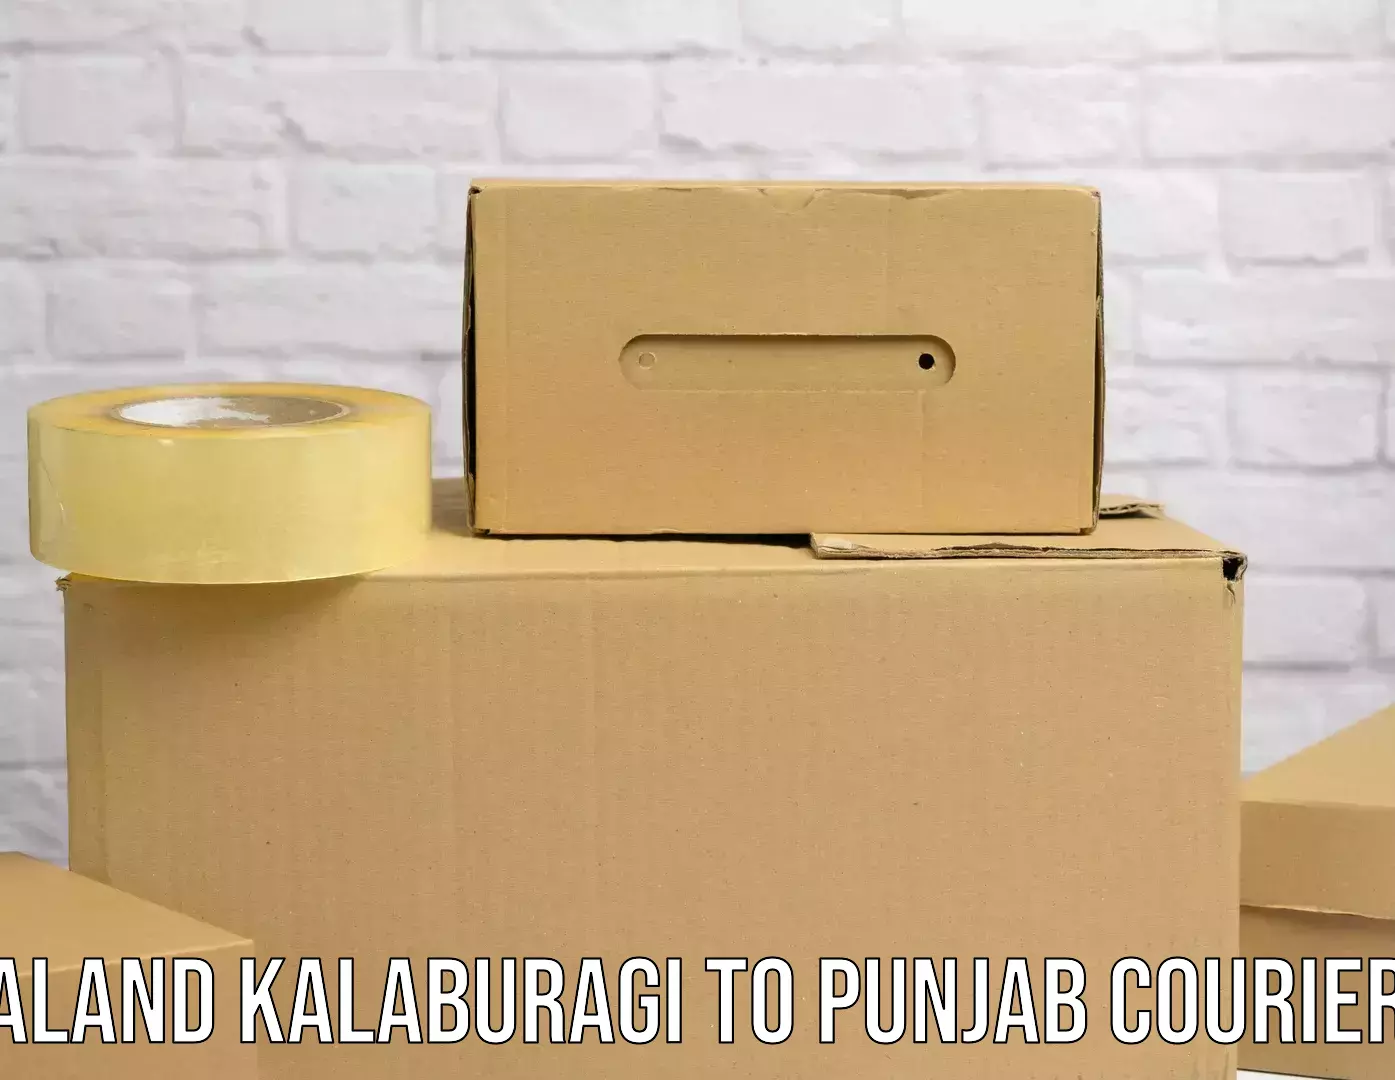 Supply chain delivery Aland Kalaburagi to Punjab